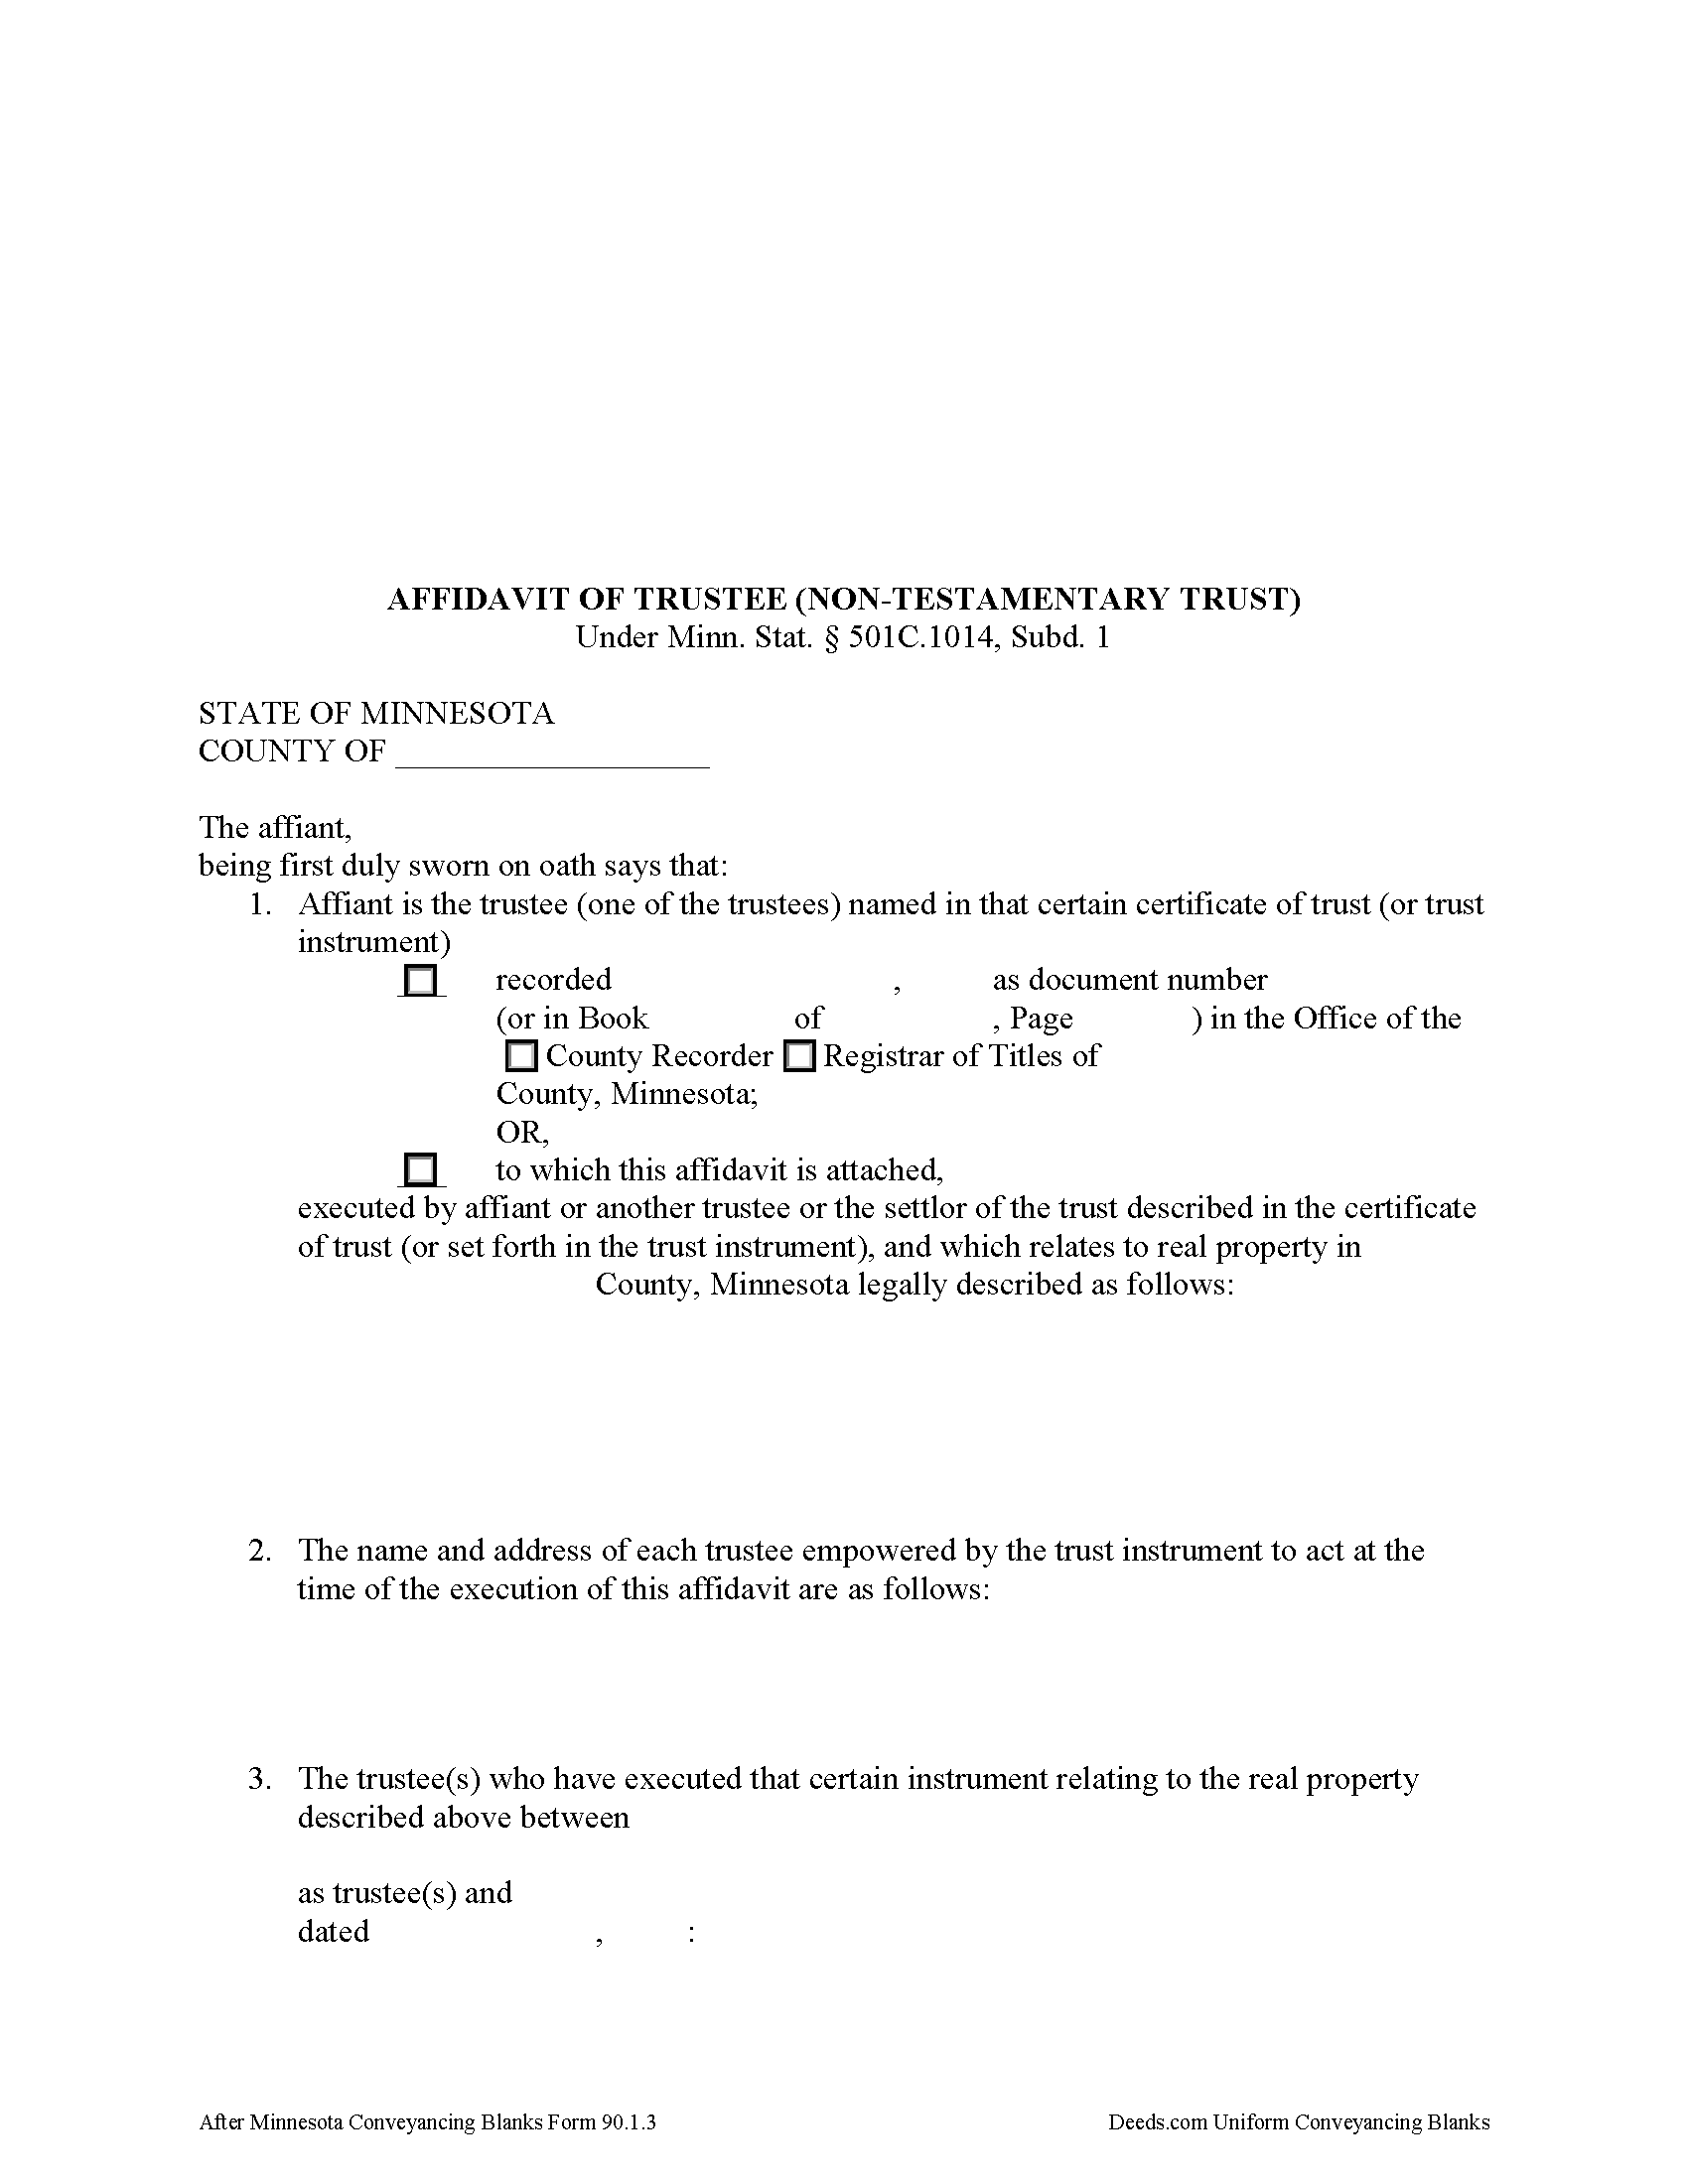 Affidavit of Trustee Form